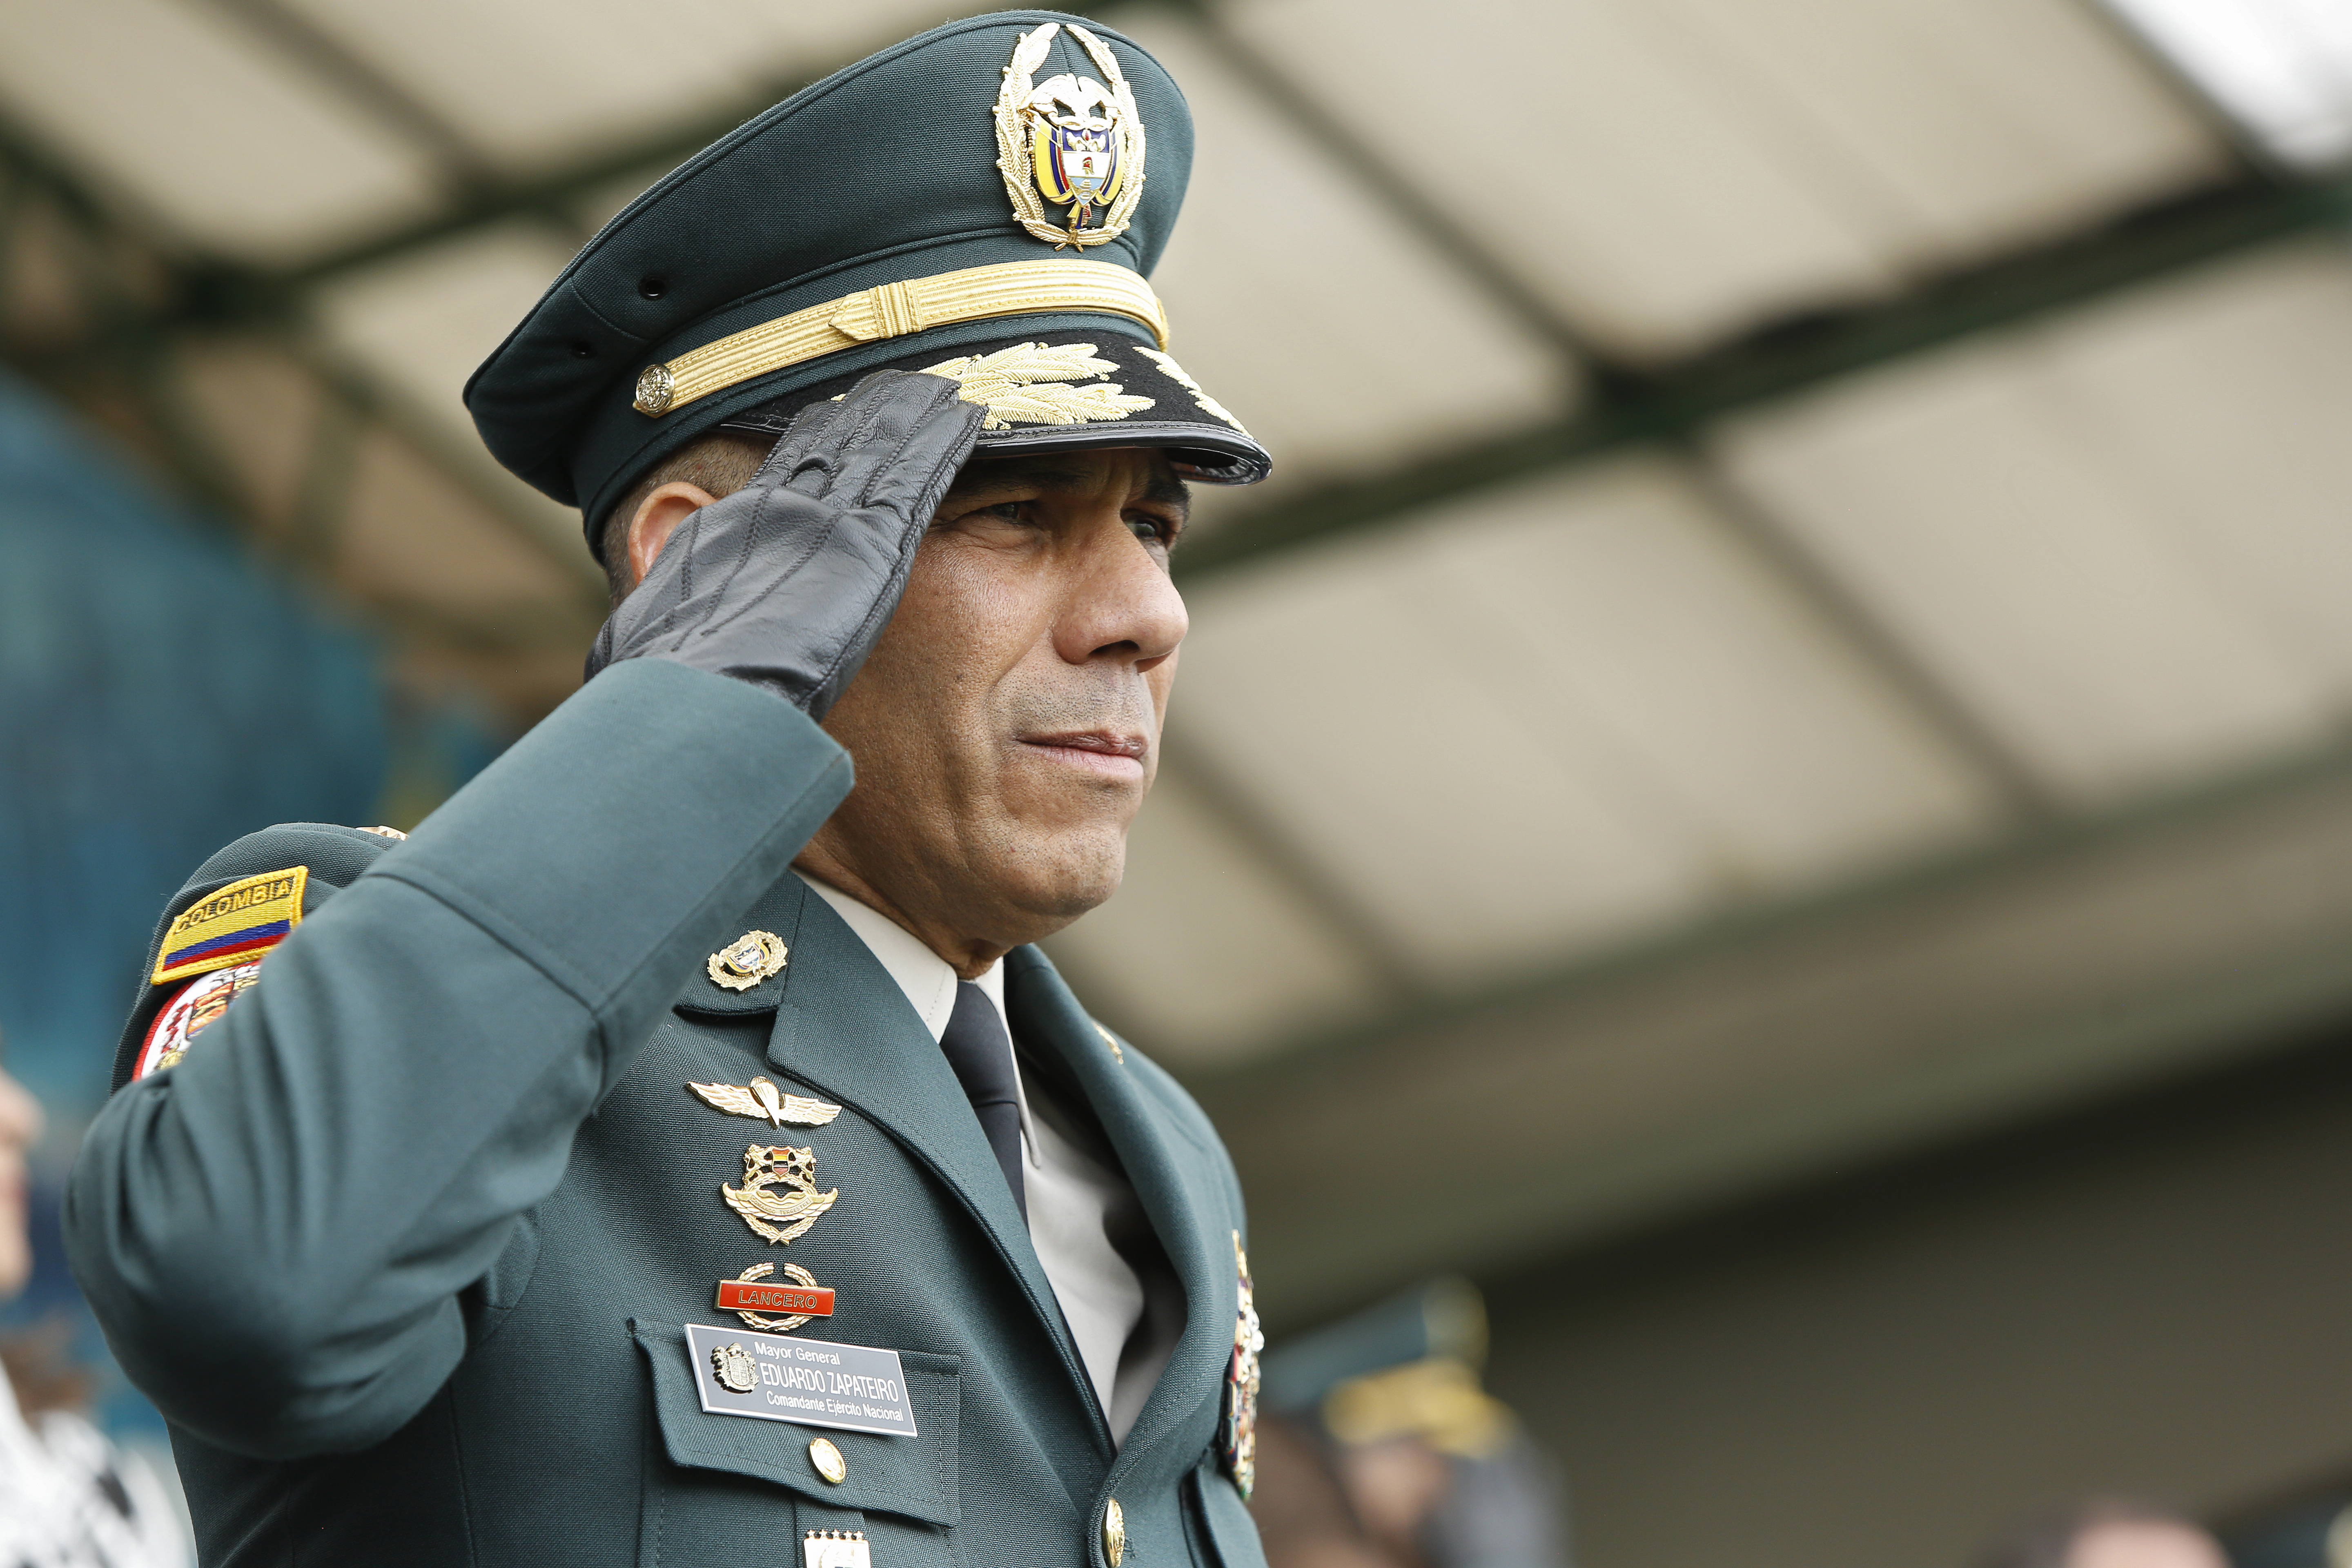 Gorra Militar Tipo C de Sargento Mayor ERD - Army Group